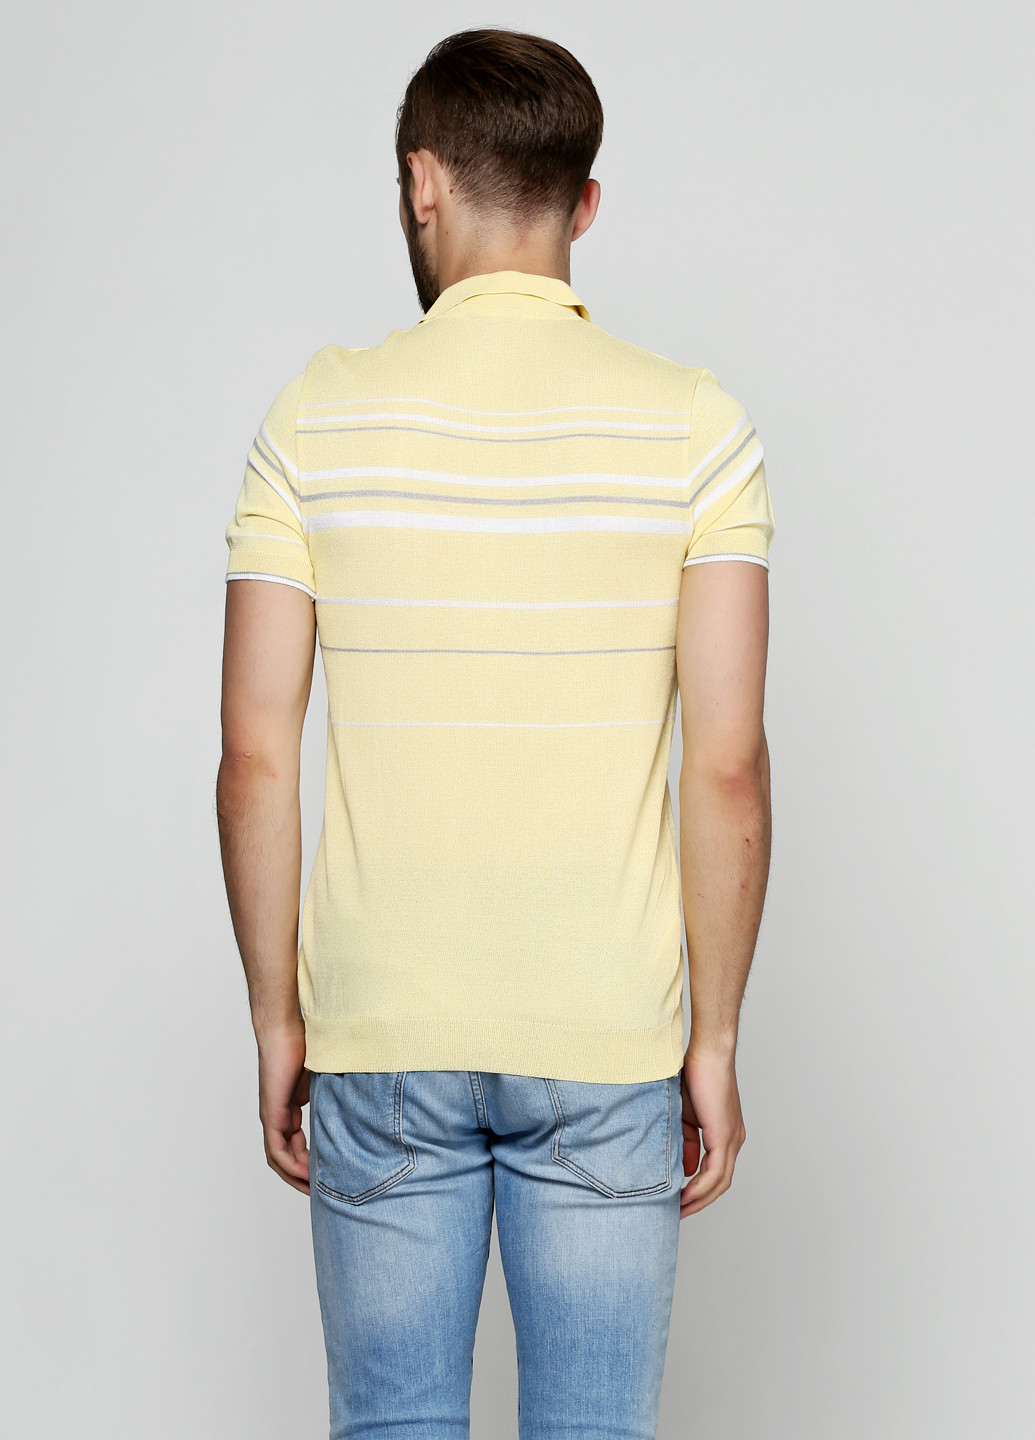 Желтая футболка-поло для мужчин Flash однотонная